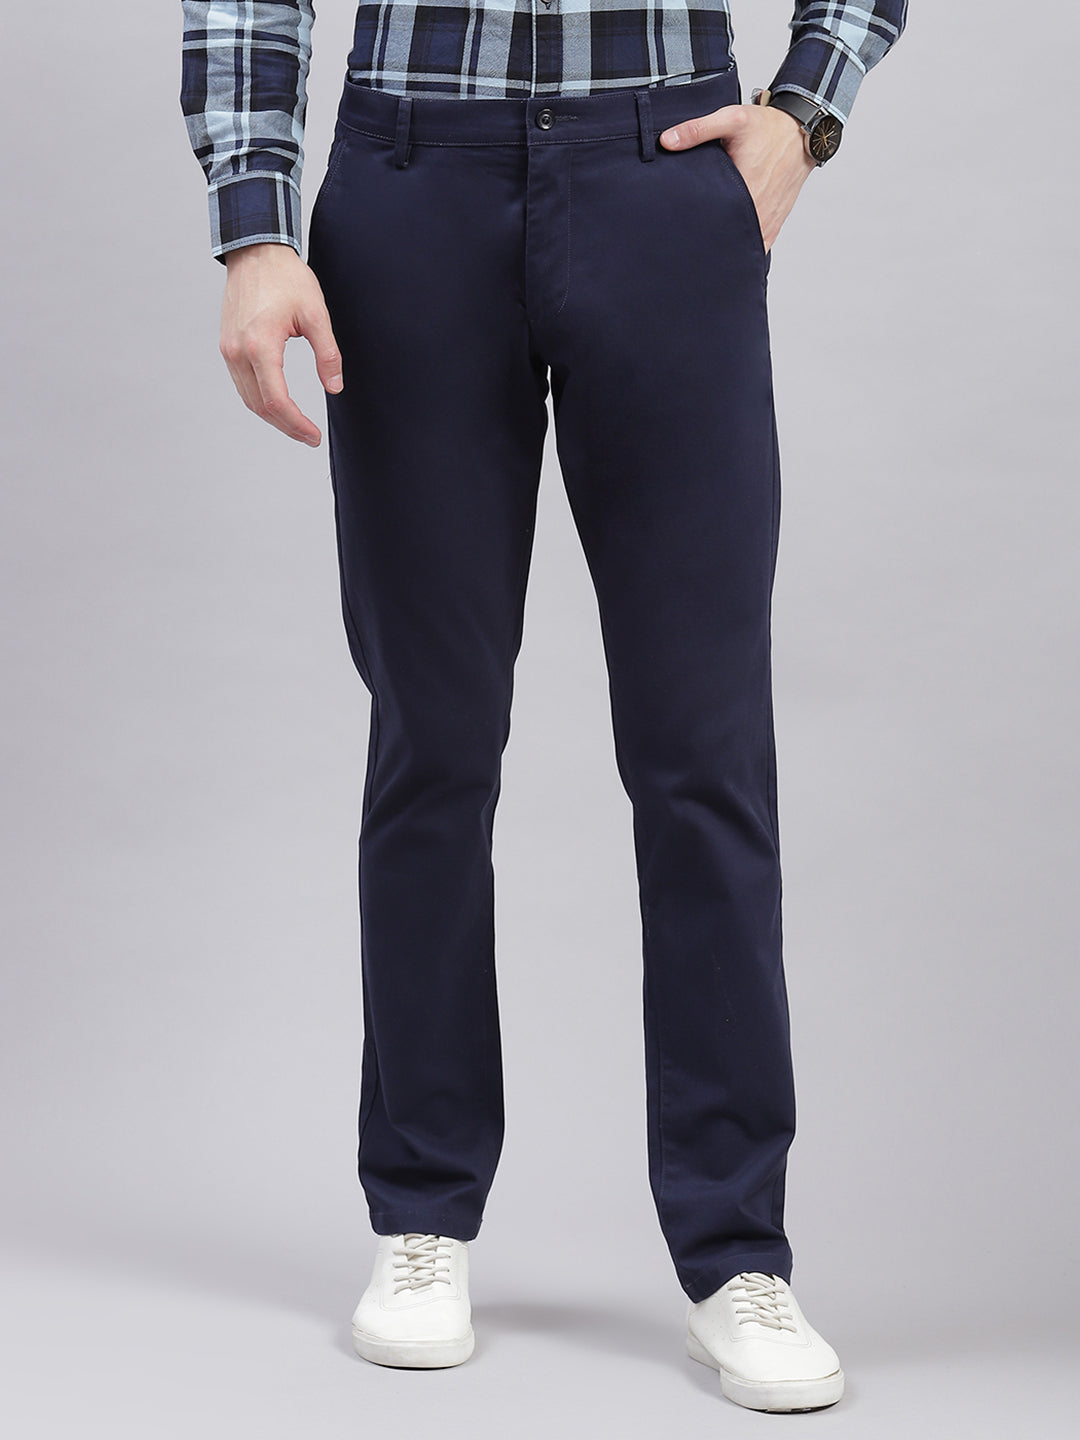 Performance Dress Pants (Blue - Tailored Slacks) | Twillory®